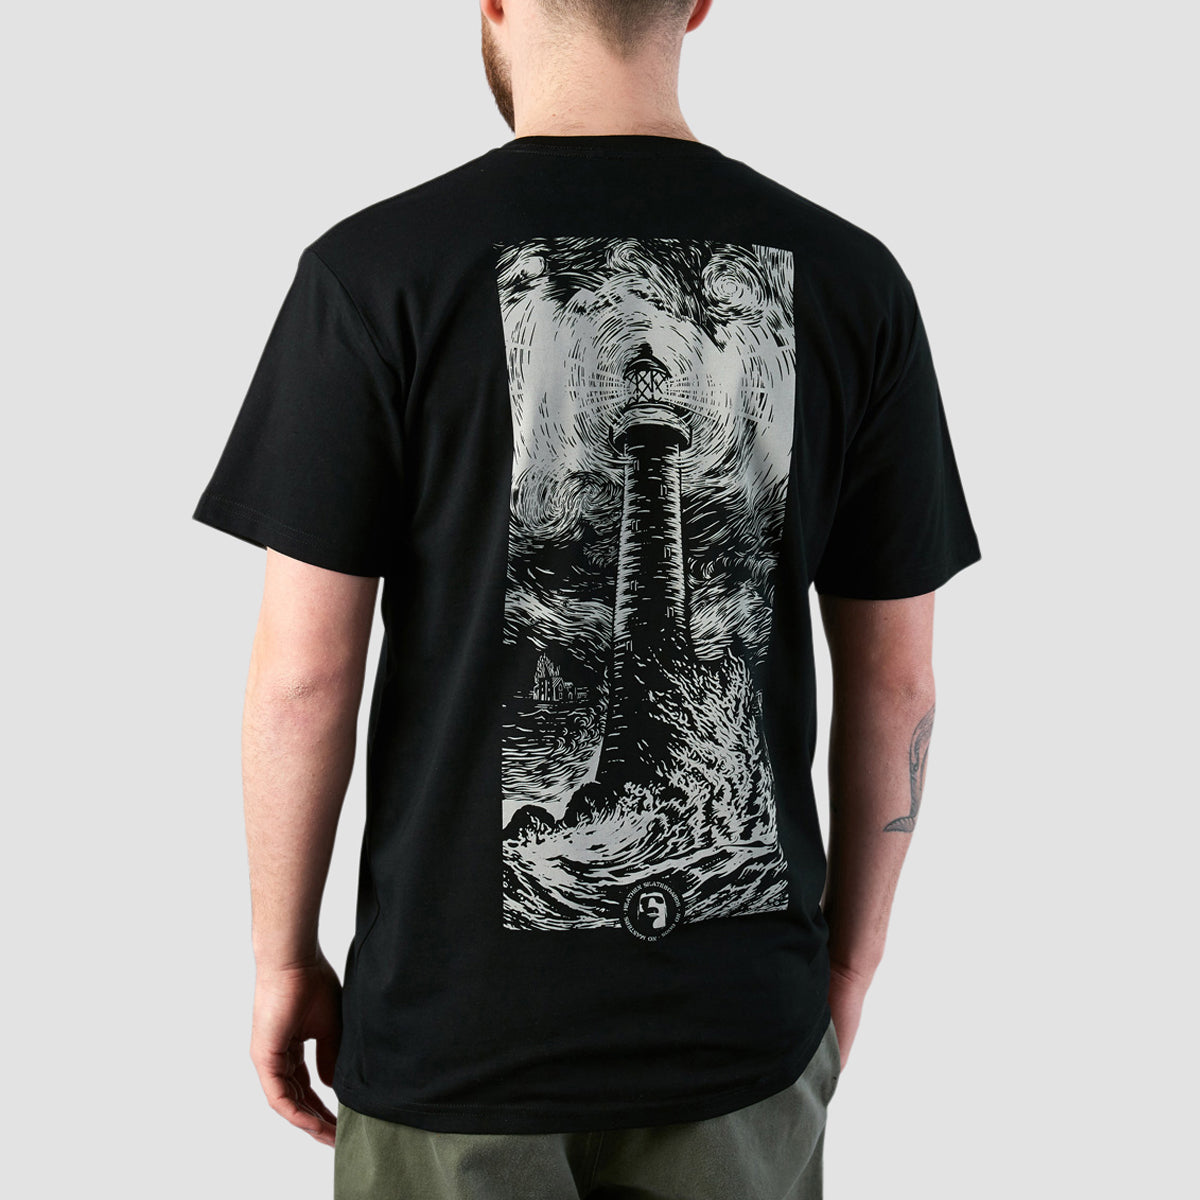 Heathen Lighthouse T-Shirt Black